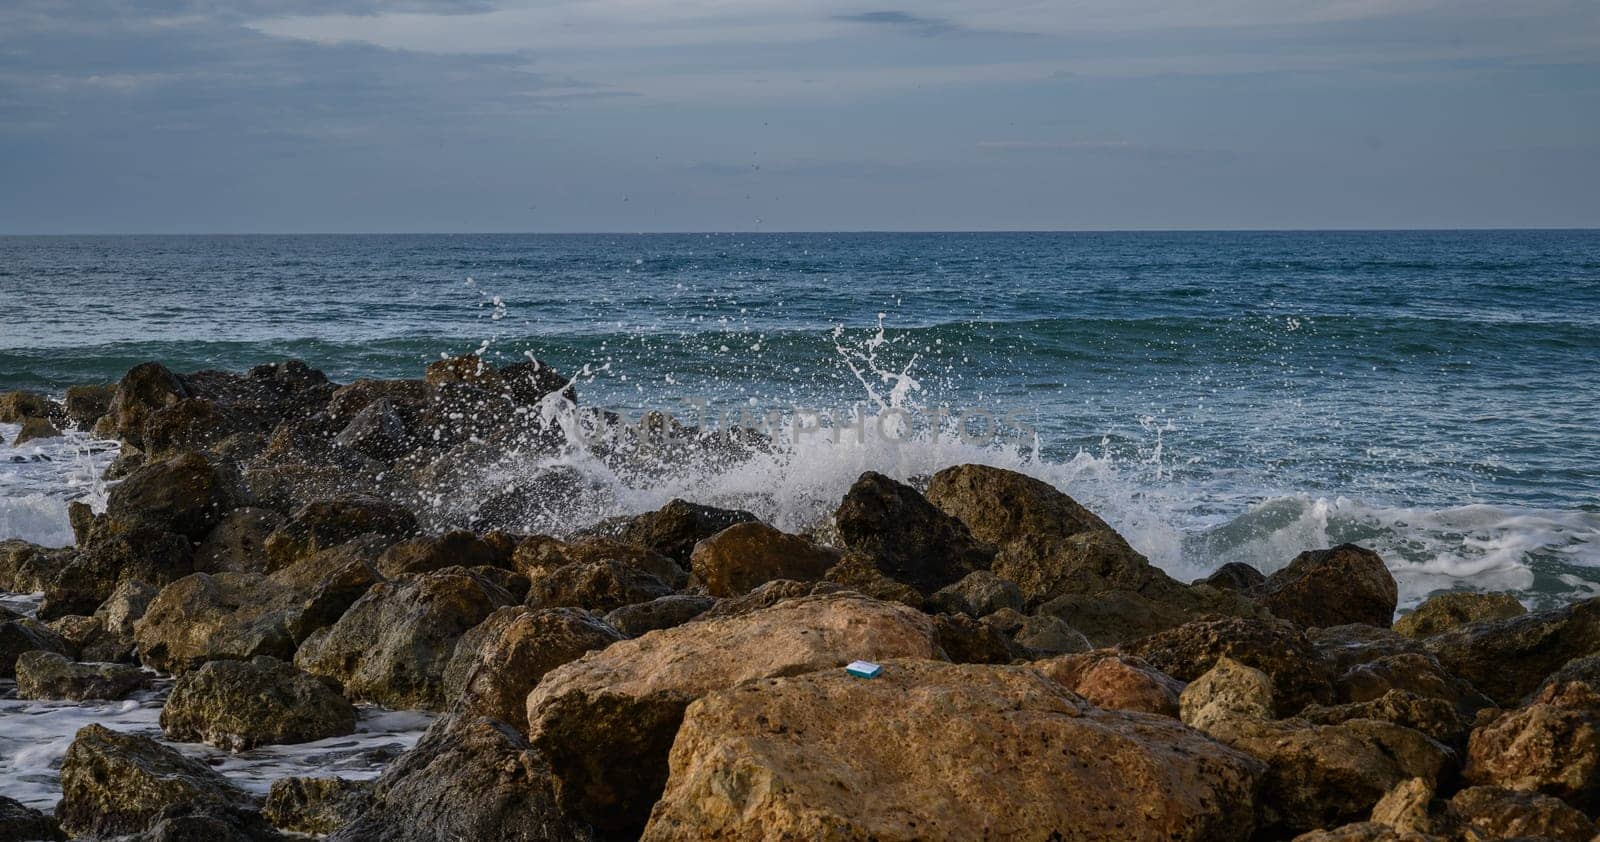 waves crashing on rocks on the Mediterranean coast 8